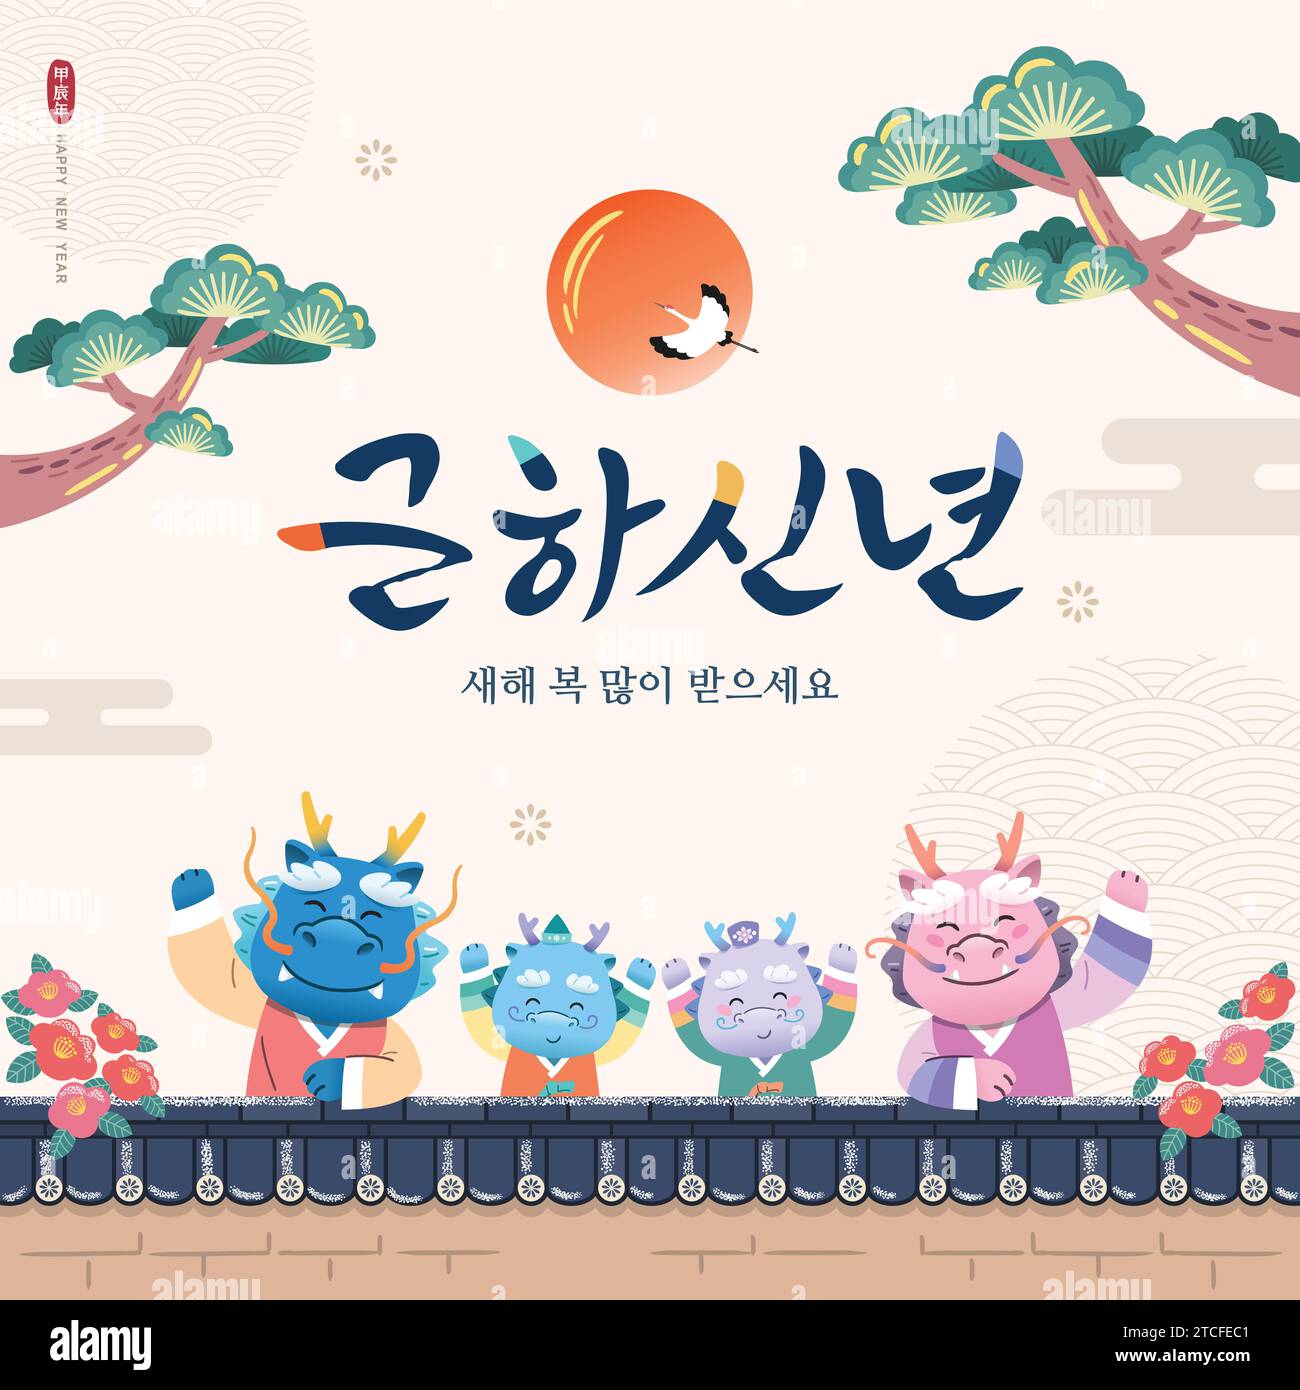 Korean New Year. The dragon family wearing hanbok is welcoming the new year. Happy New Year, Korean translation. Stock Vector